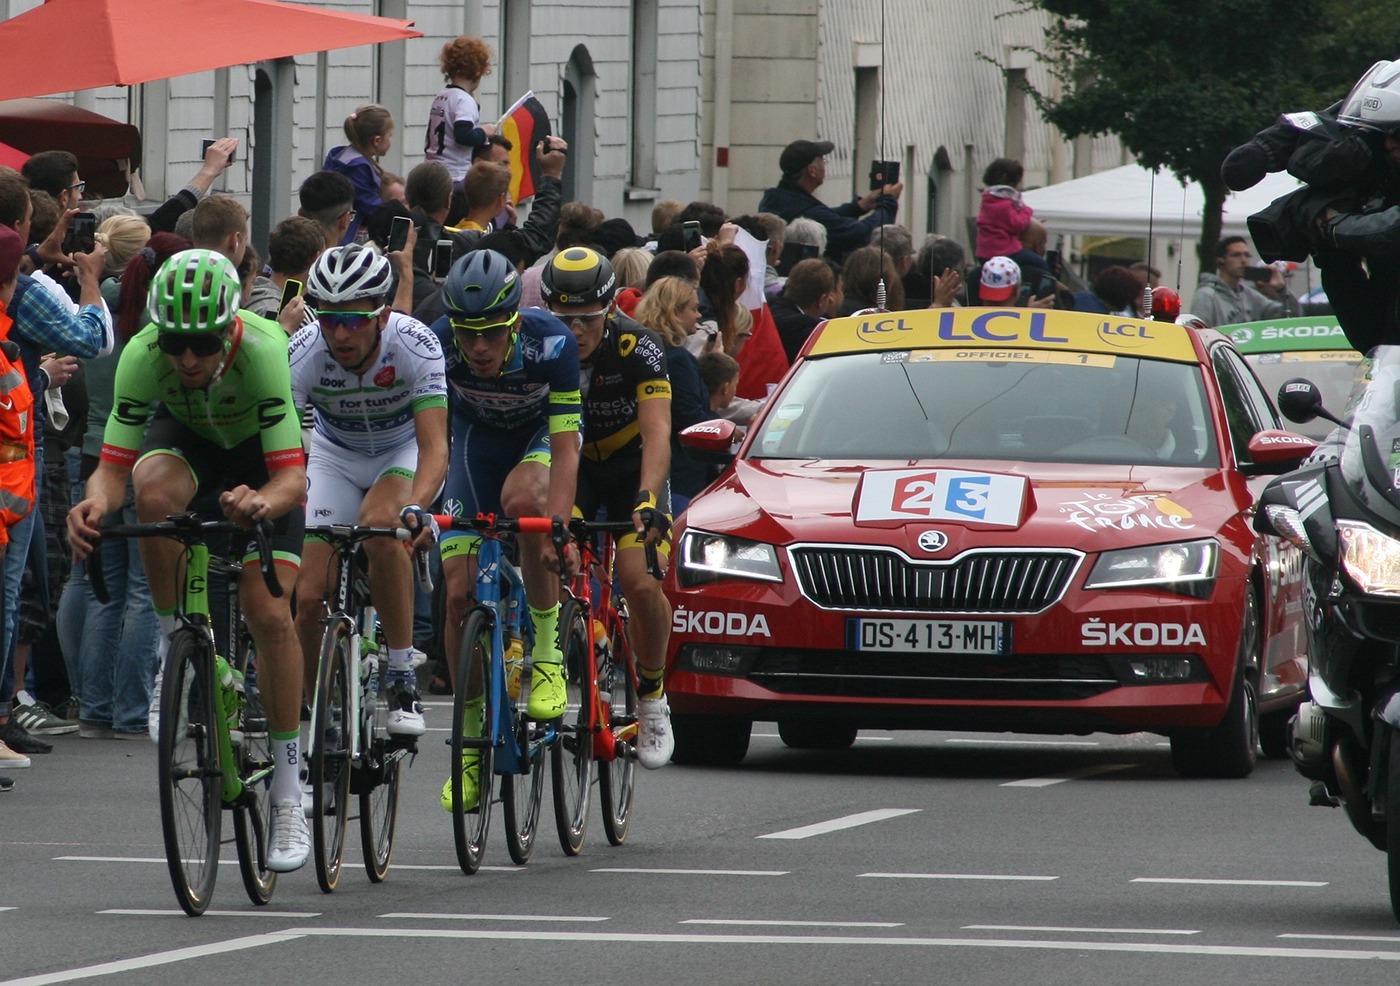 Tour de France photos Cycling domenica cresap